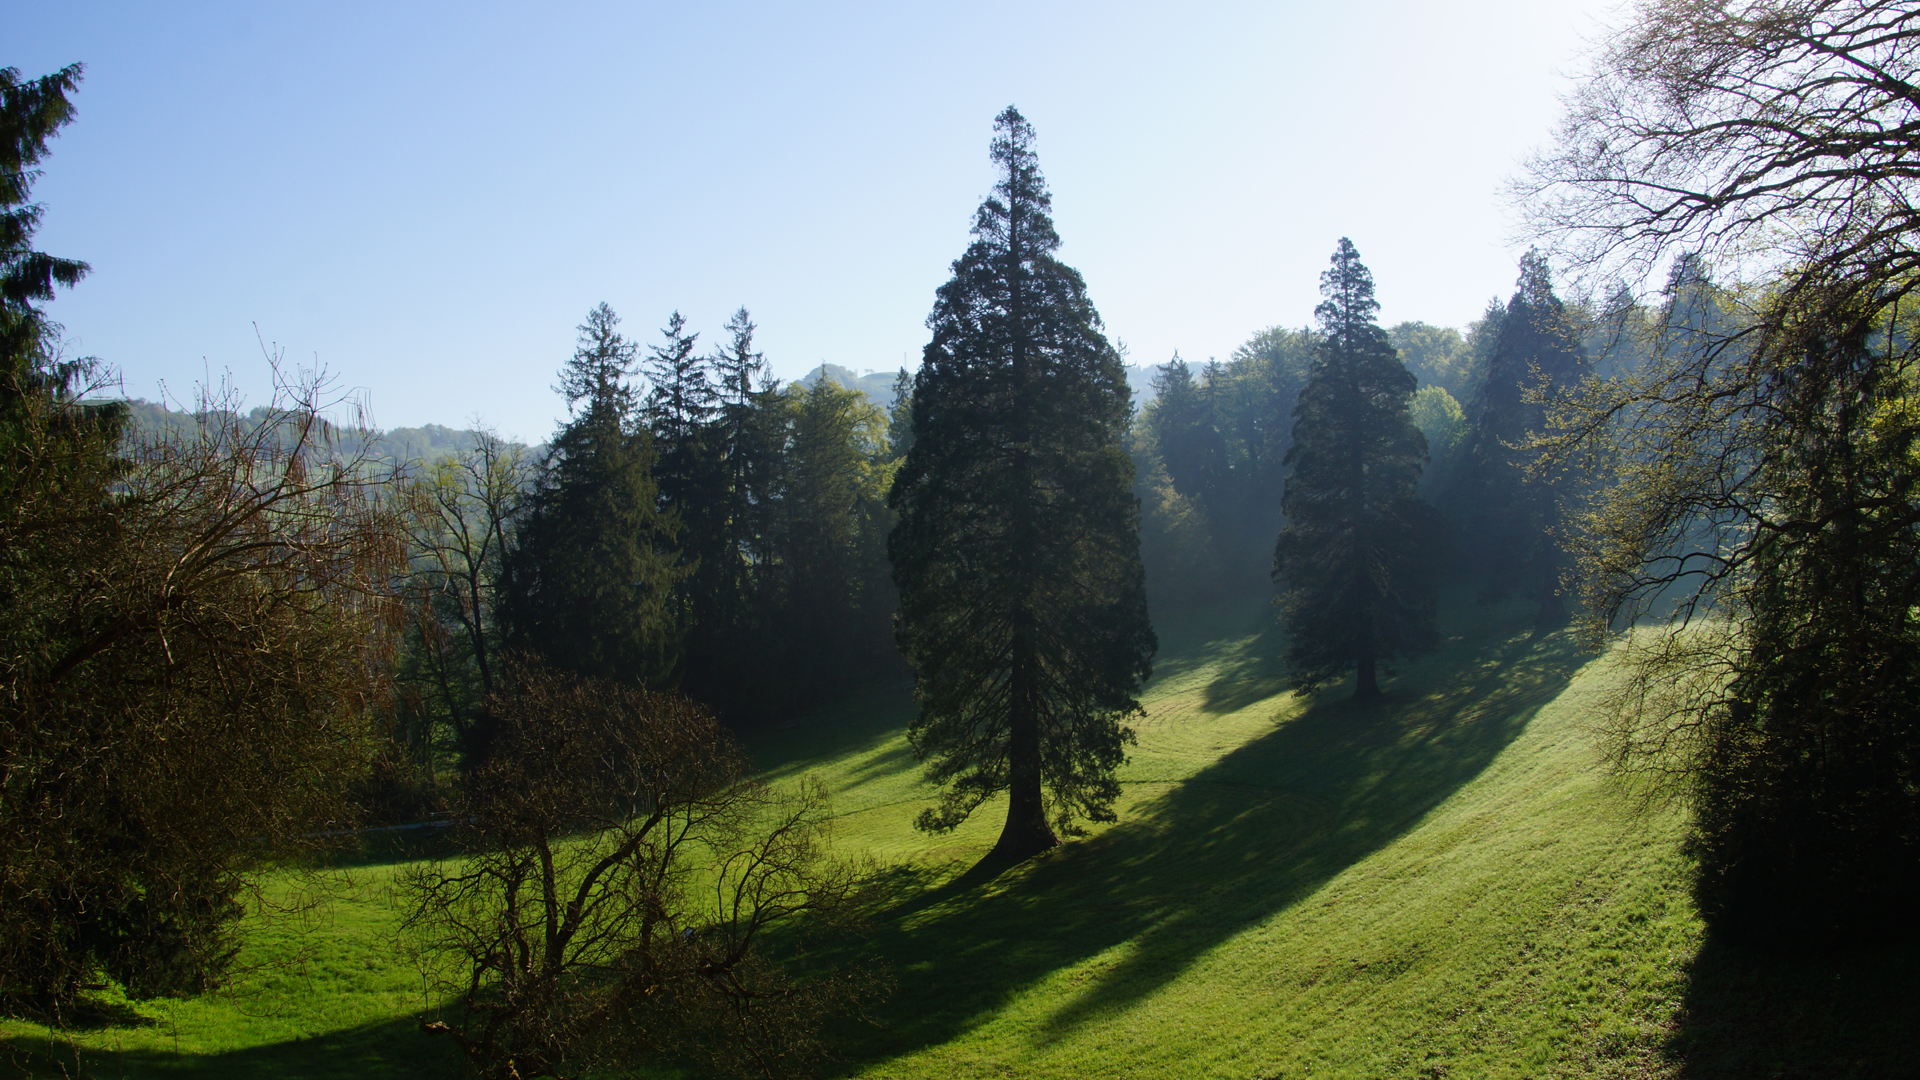 Slowenien 29: Mammutbäume im Kurpark der Therme Rimske Toplice